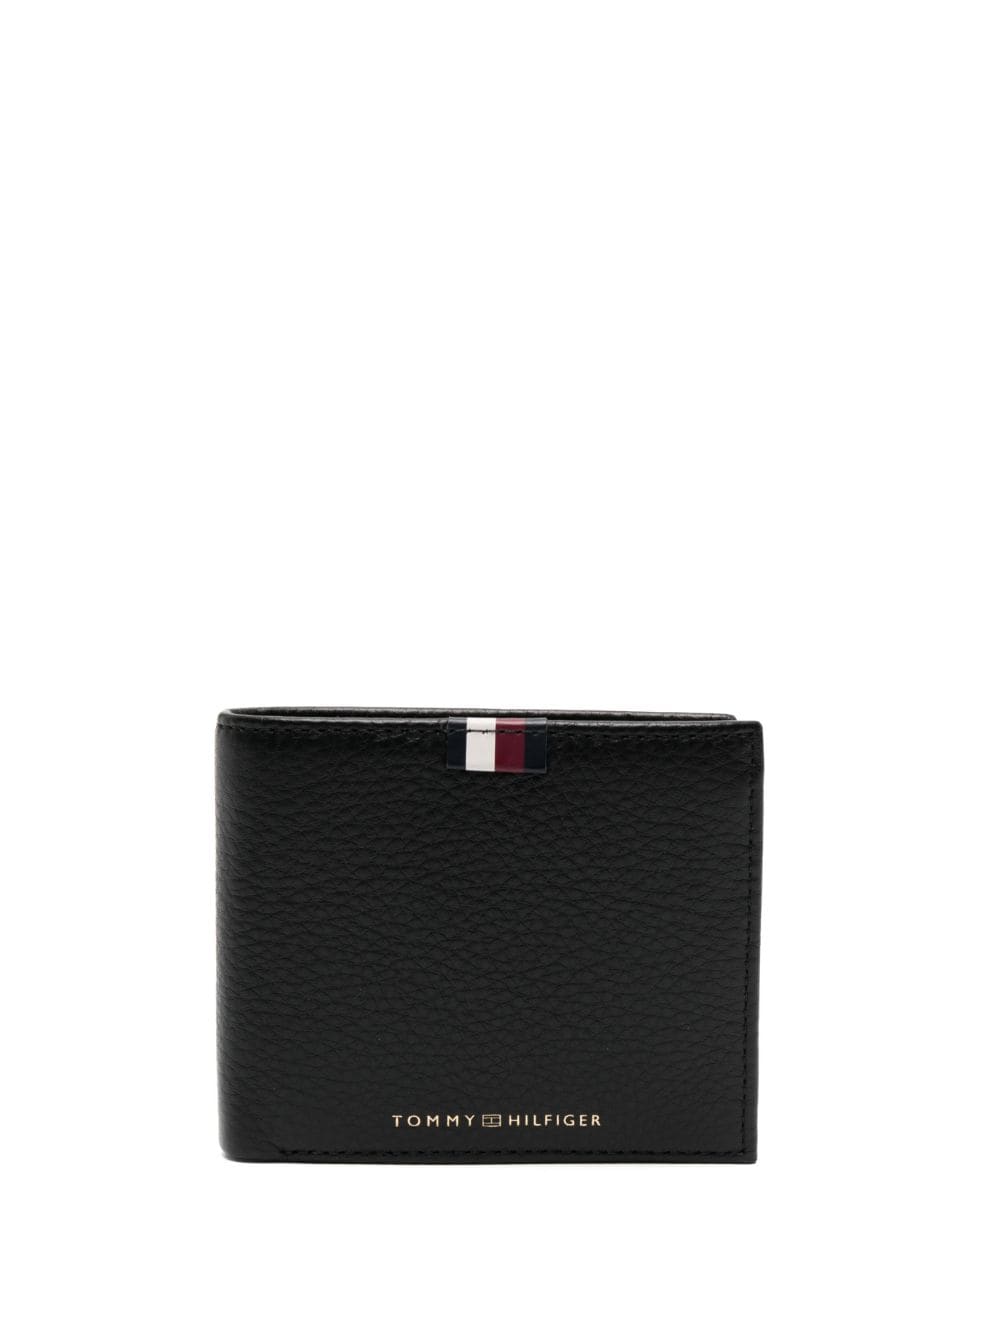 Tommy Hilfiger TH Premium Leather Wallet - Farfetch